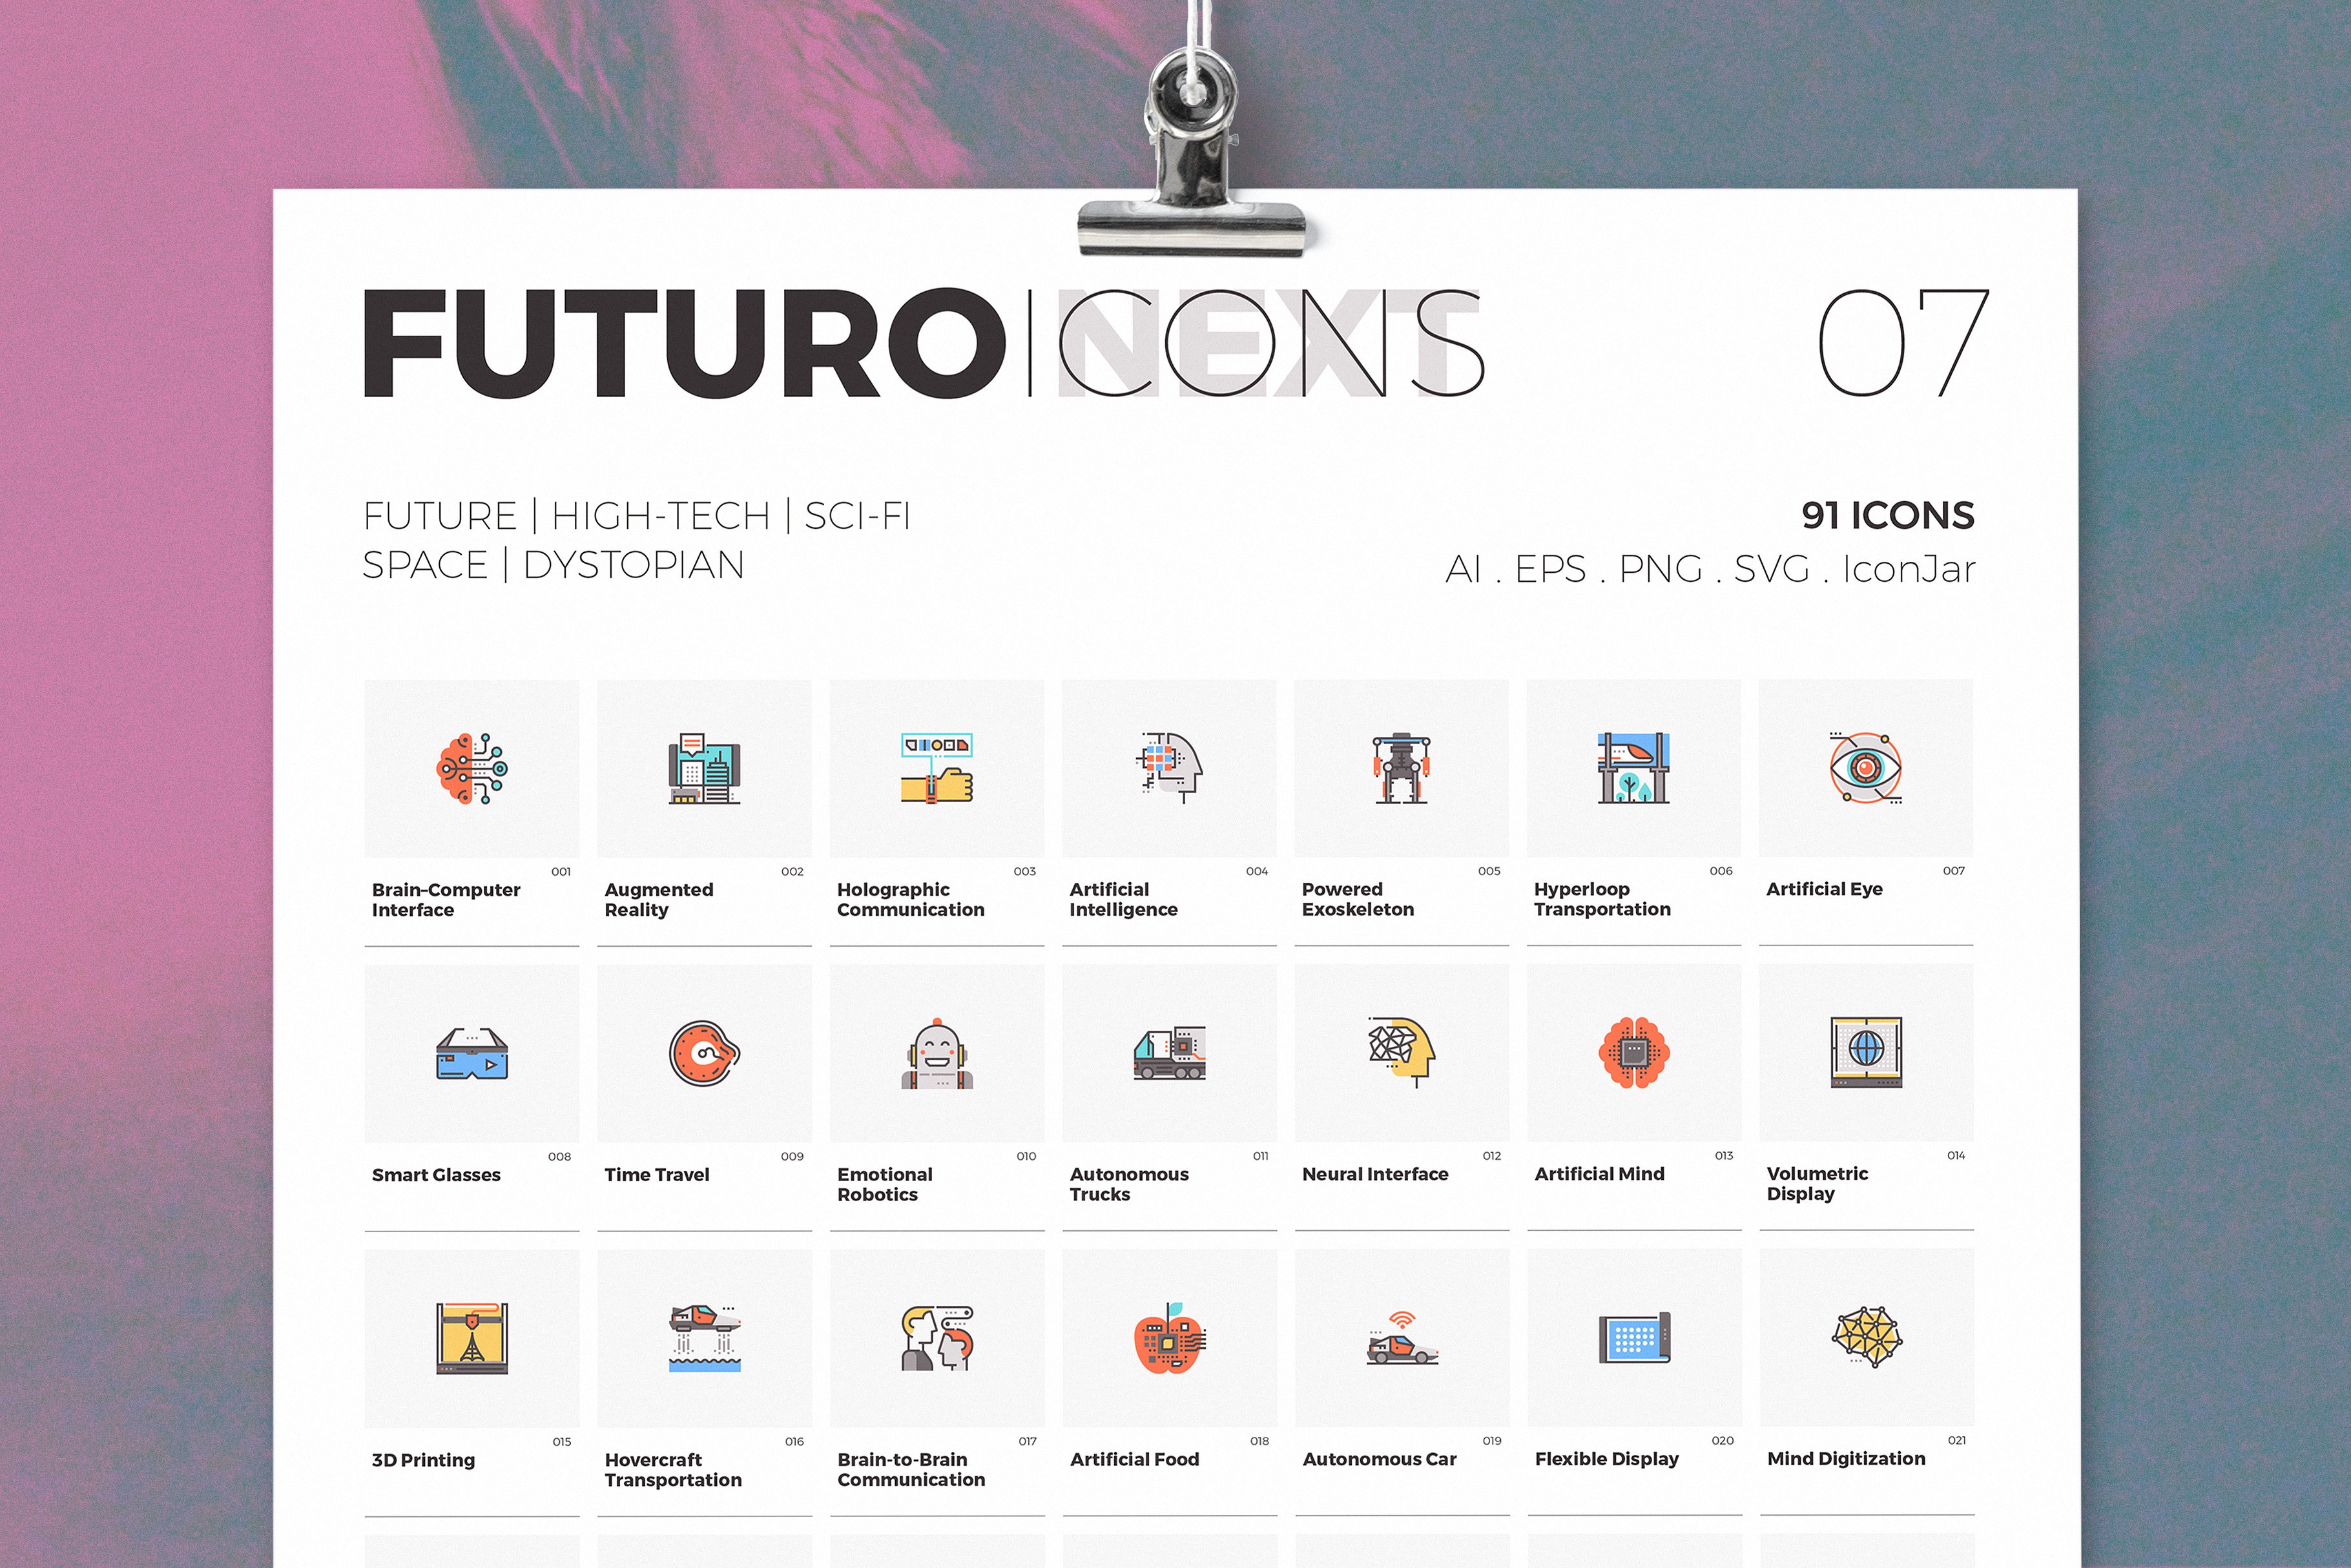 Futuro Next Icons / Future Pack cover image.